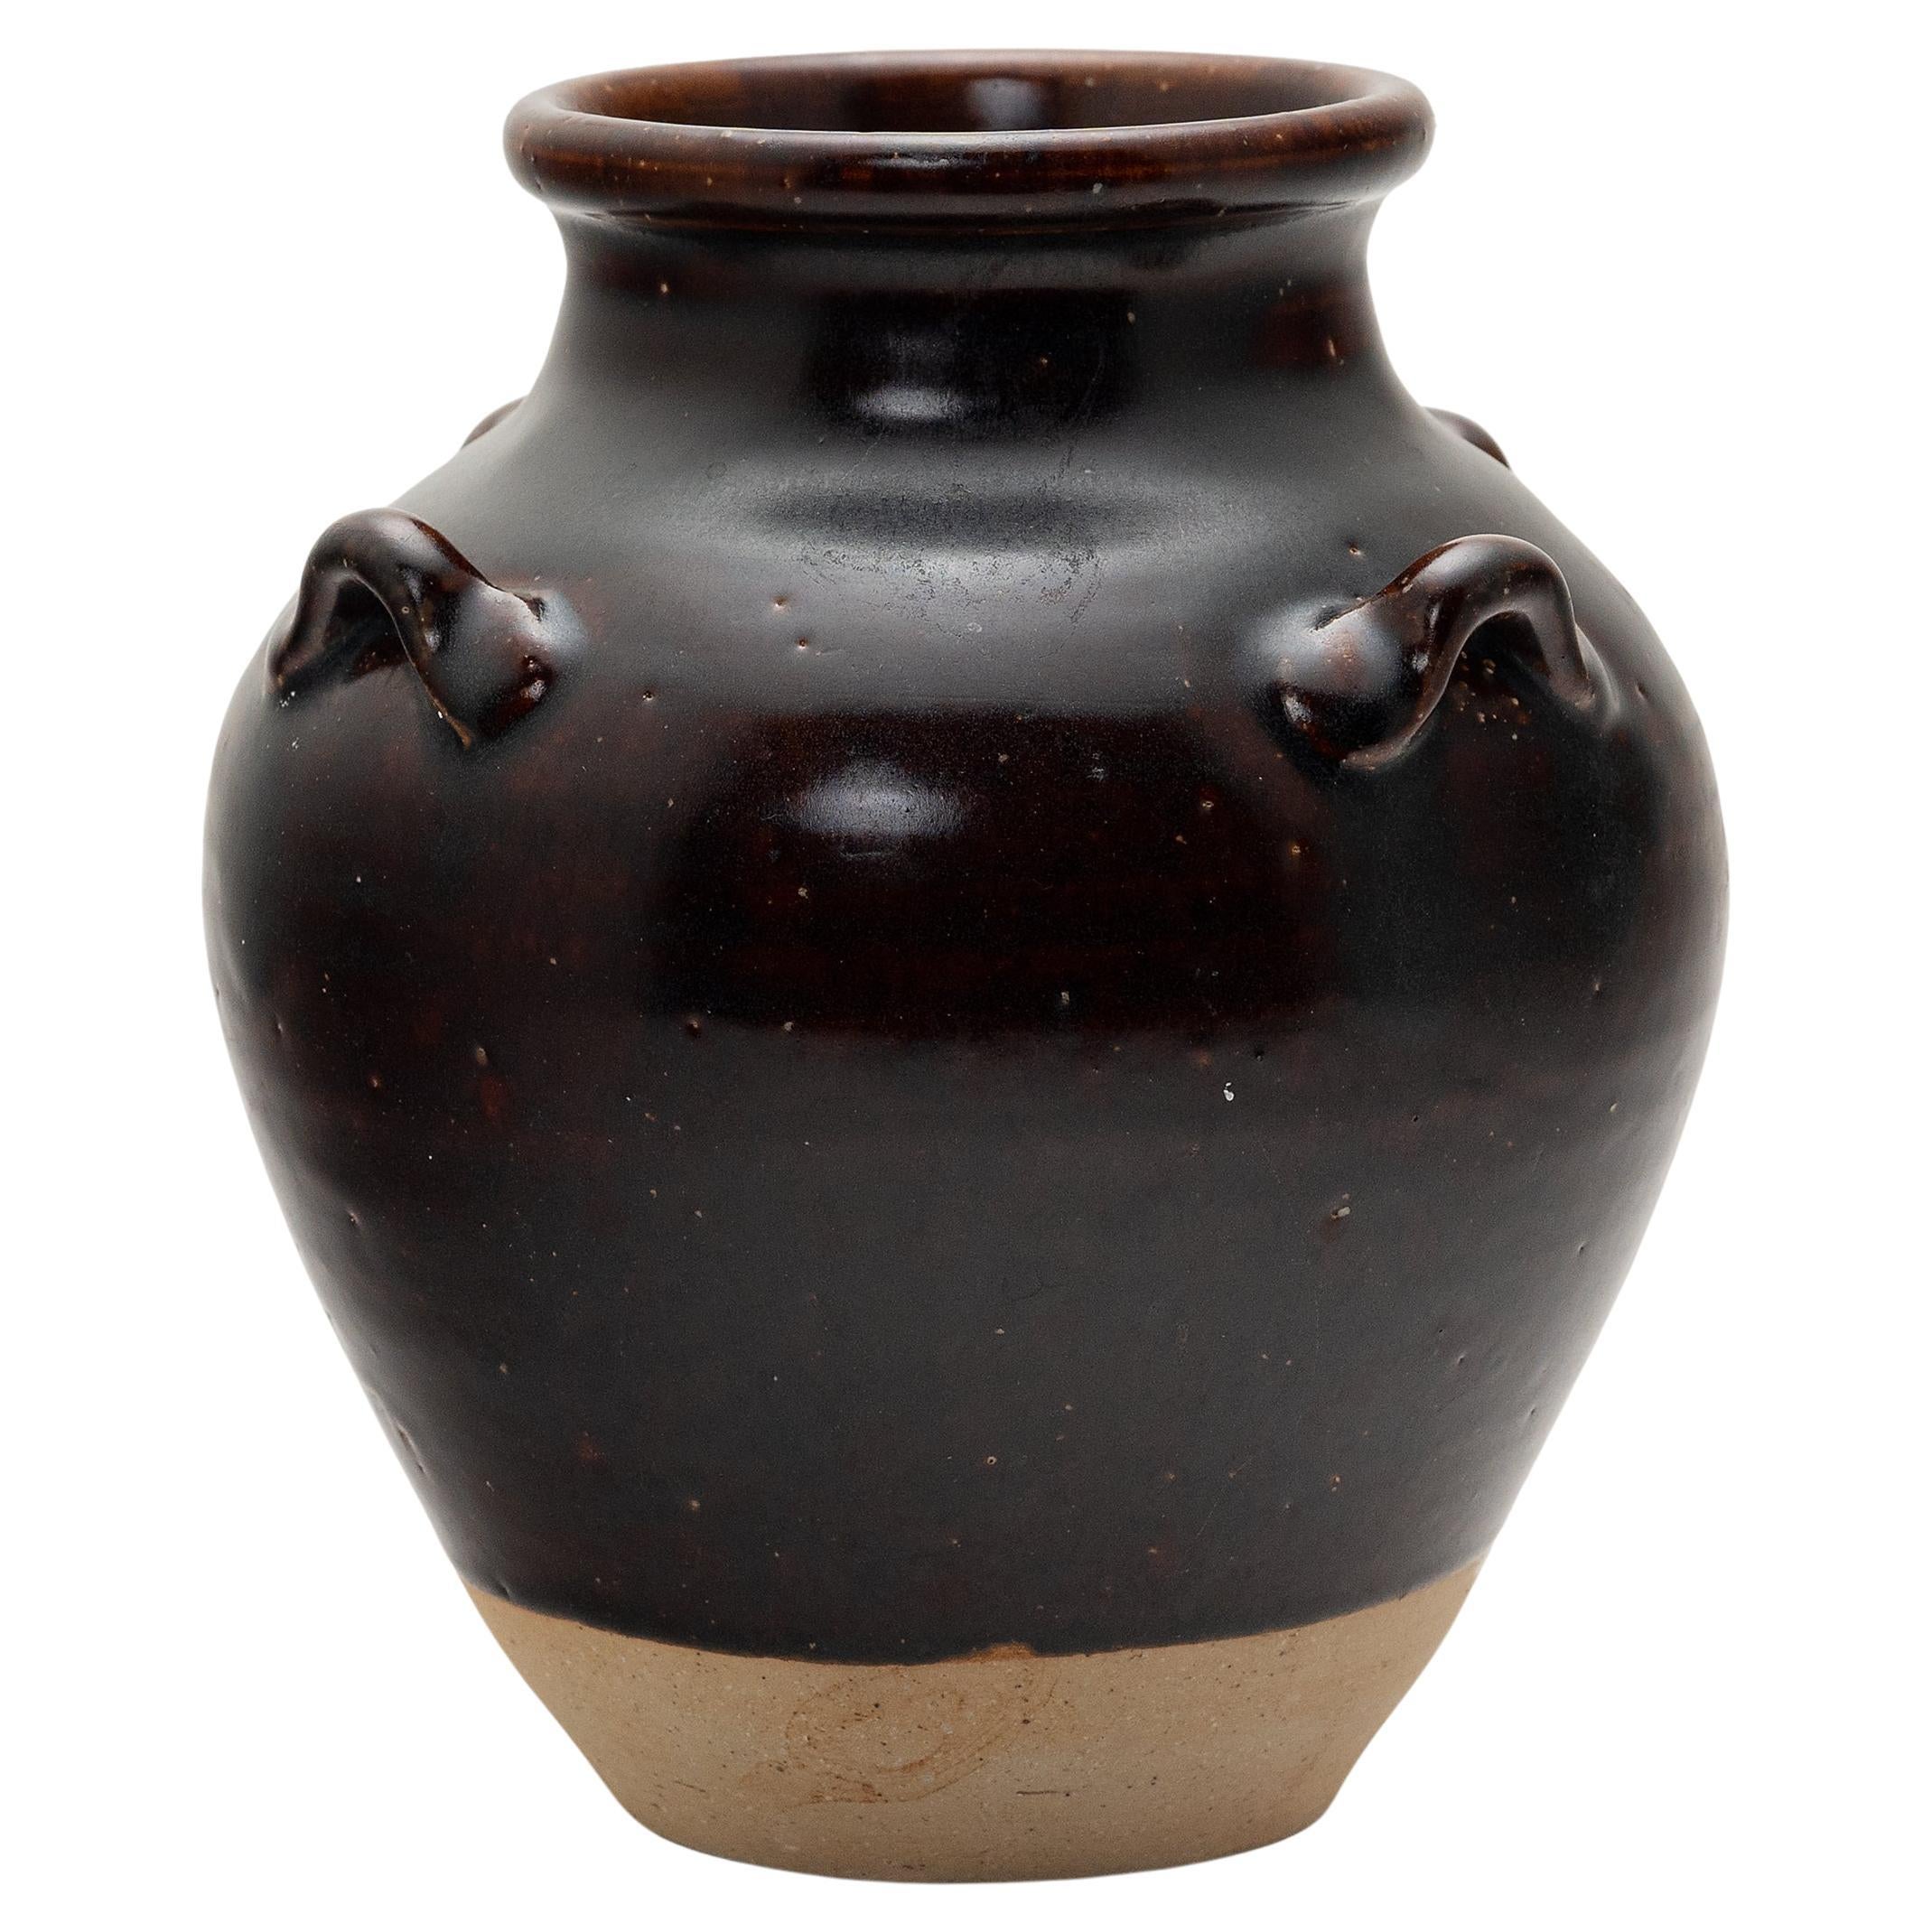 Chinese Dark Glazed Jar, c. 1900